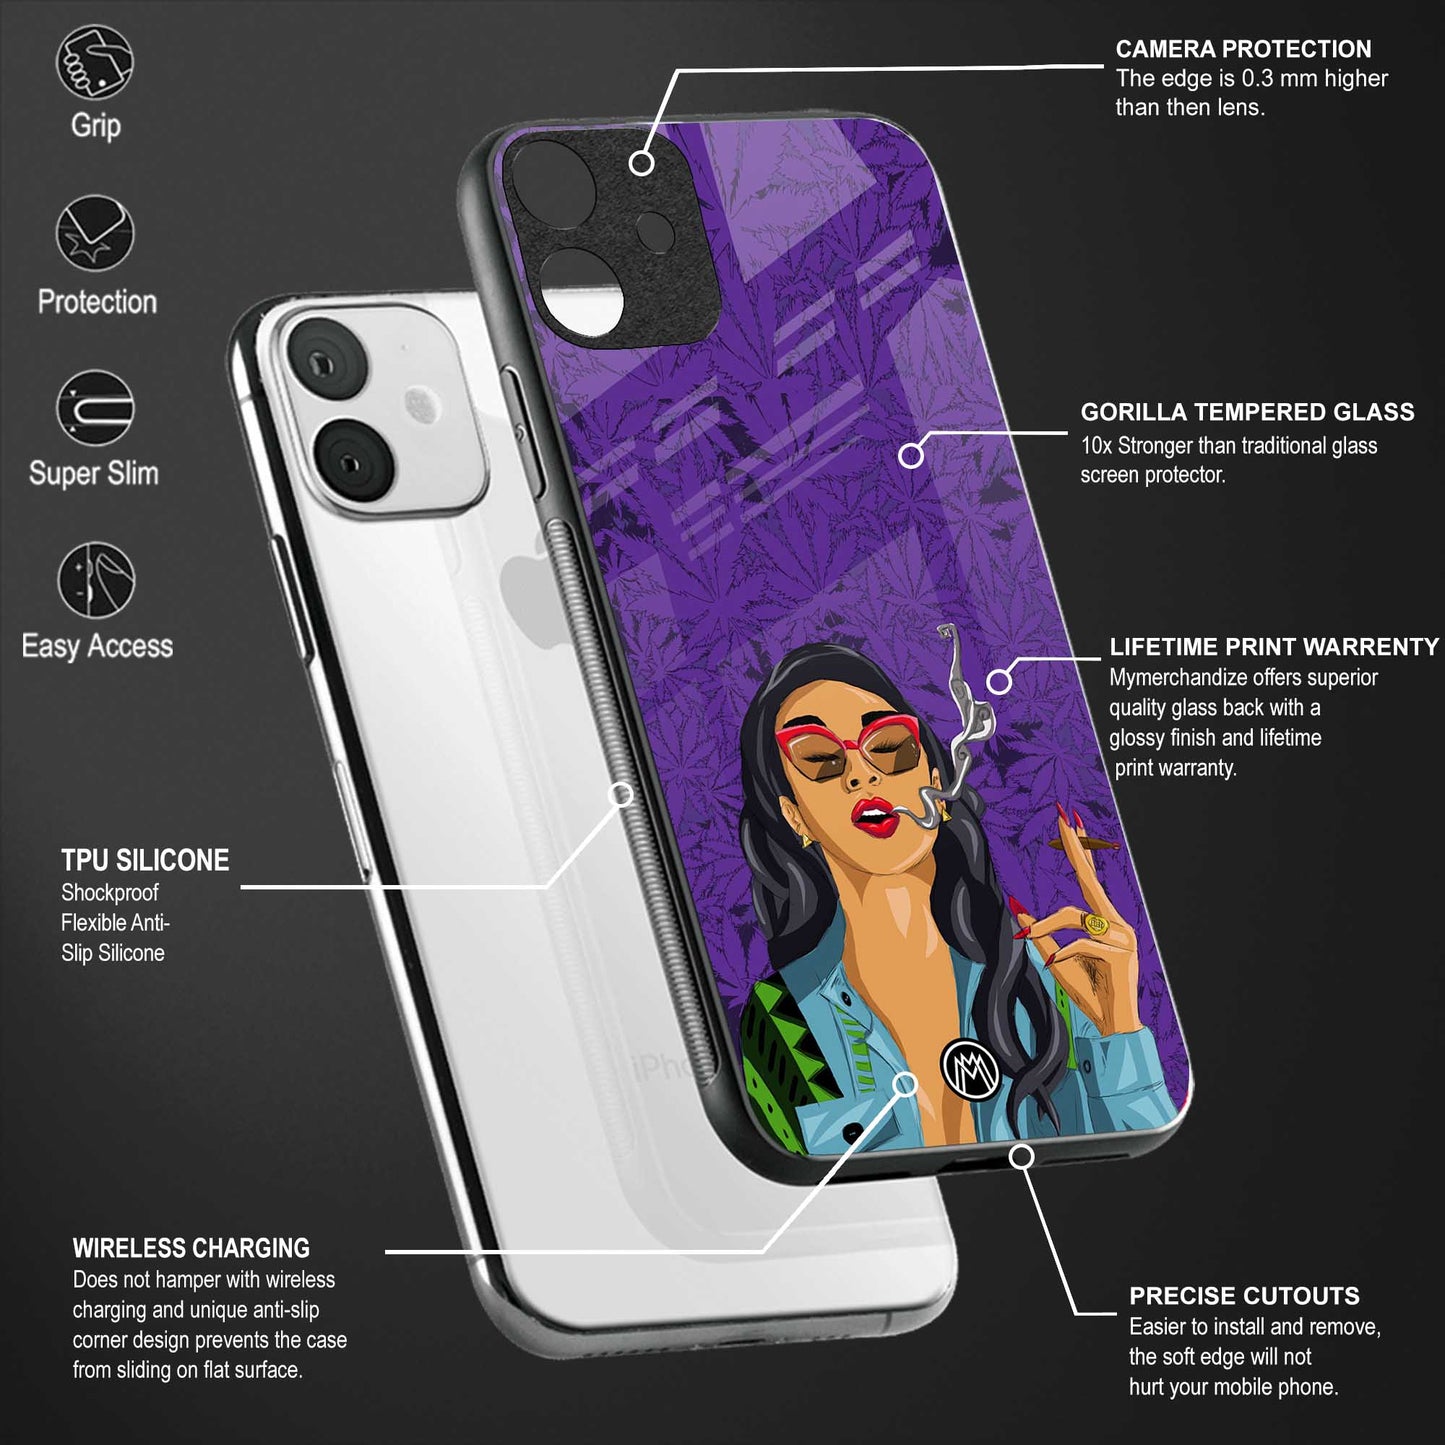 purple smoke back phone cover | glass case for realme 9 pro 5g